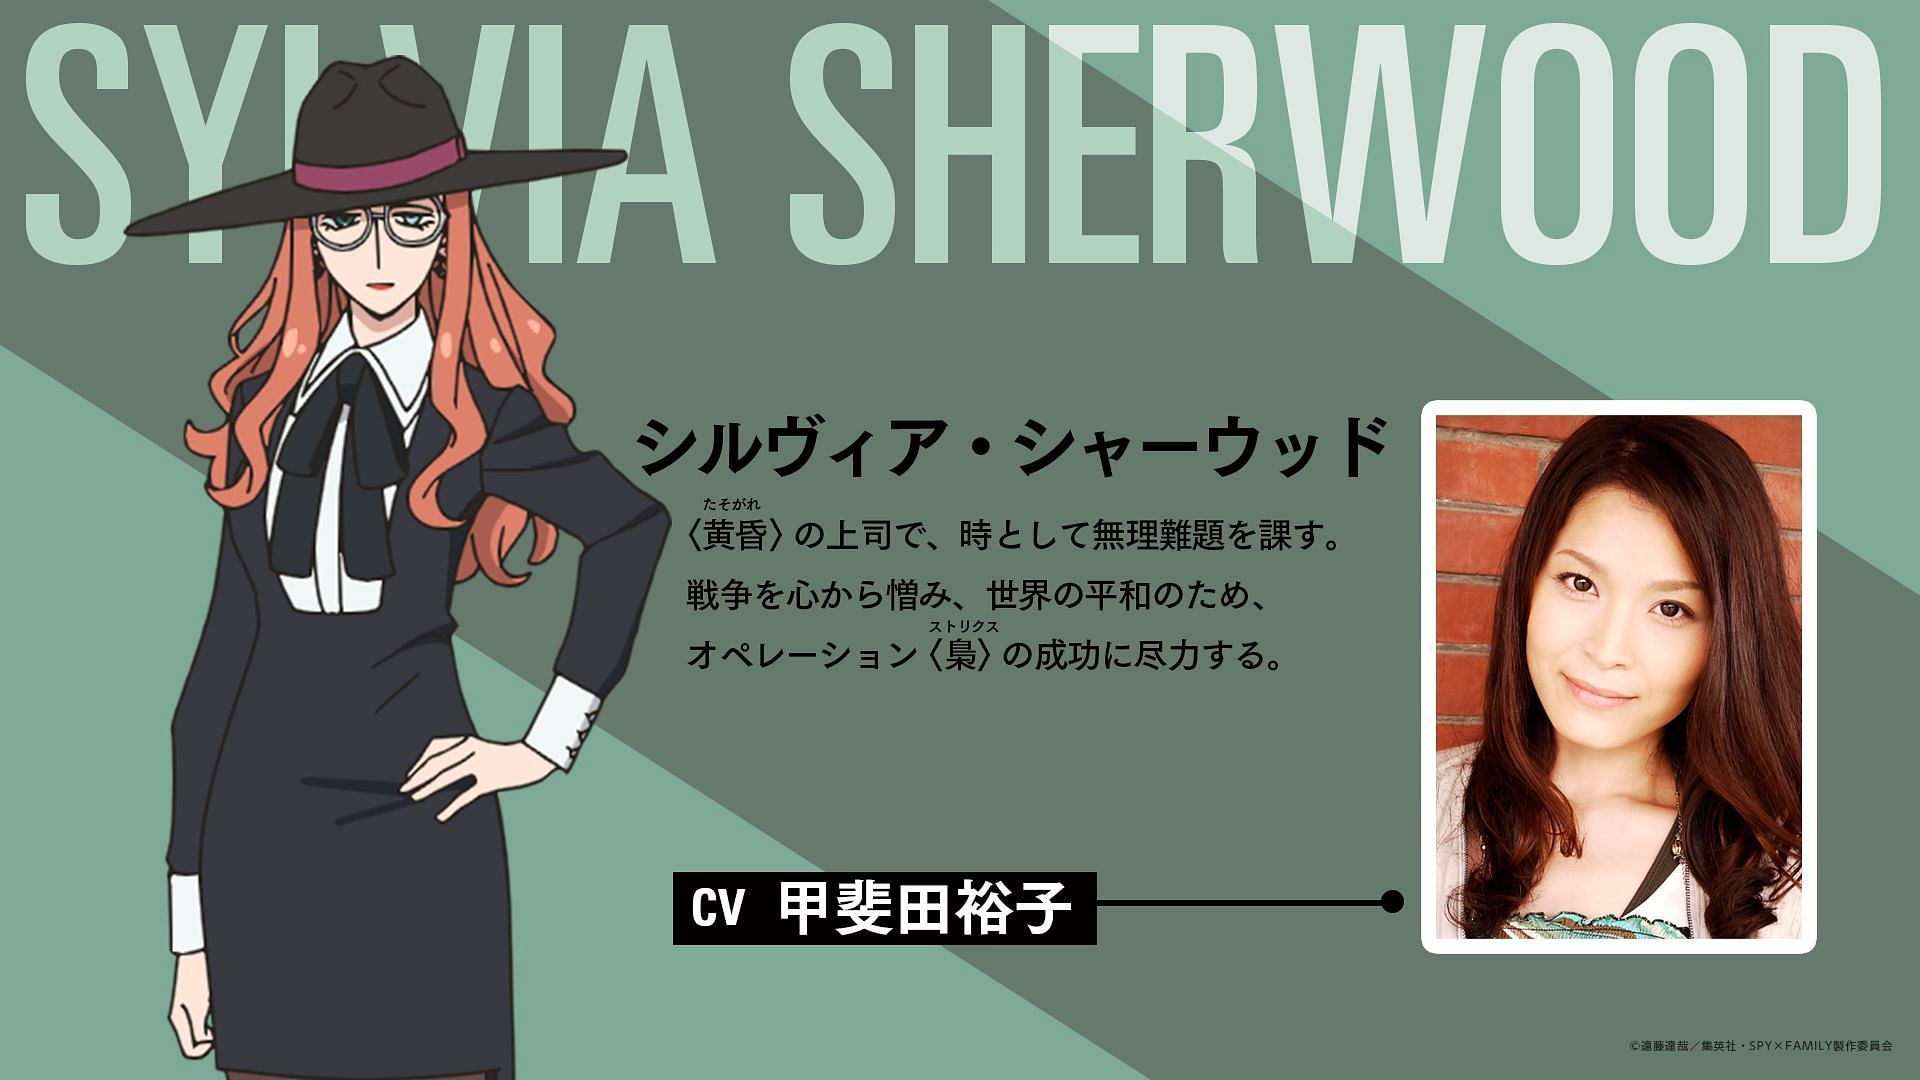 Sylvia Sherwood (Image via Twitter/@animetv_jp)